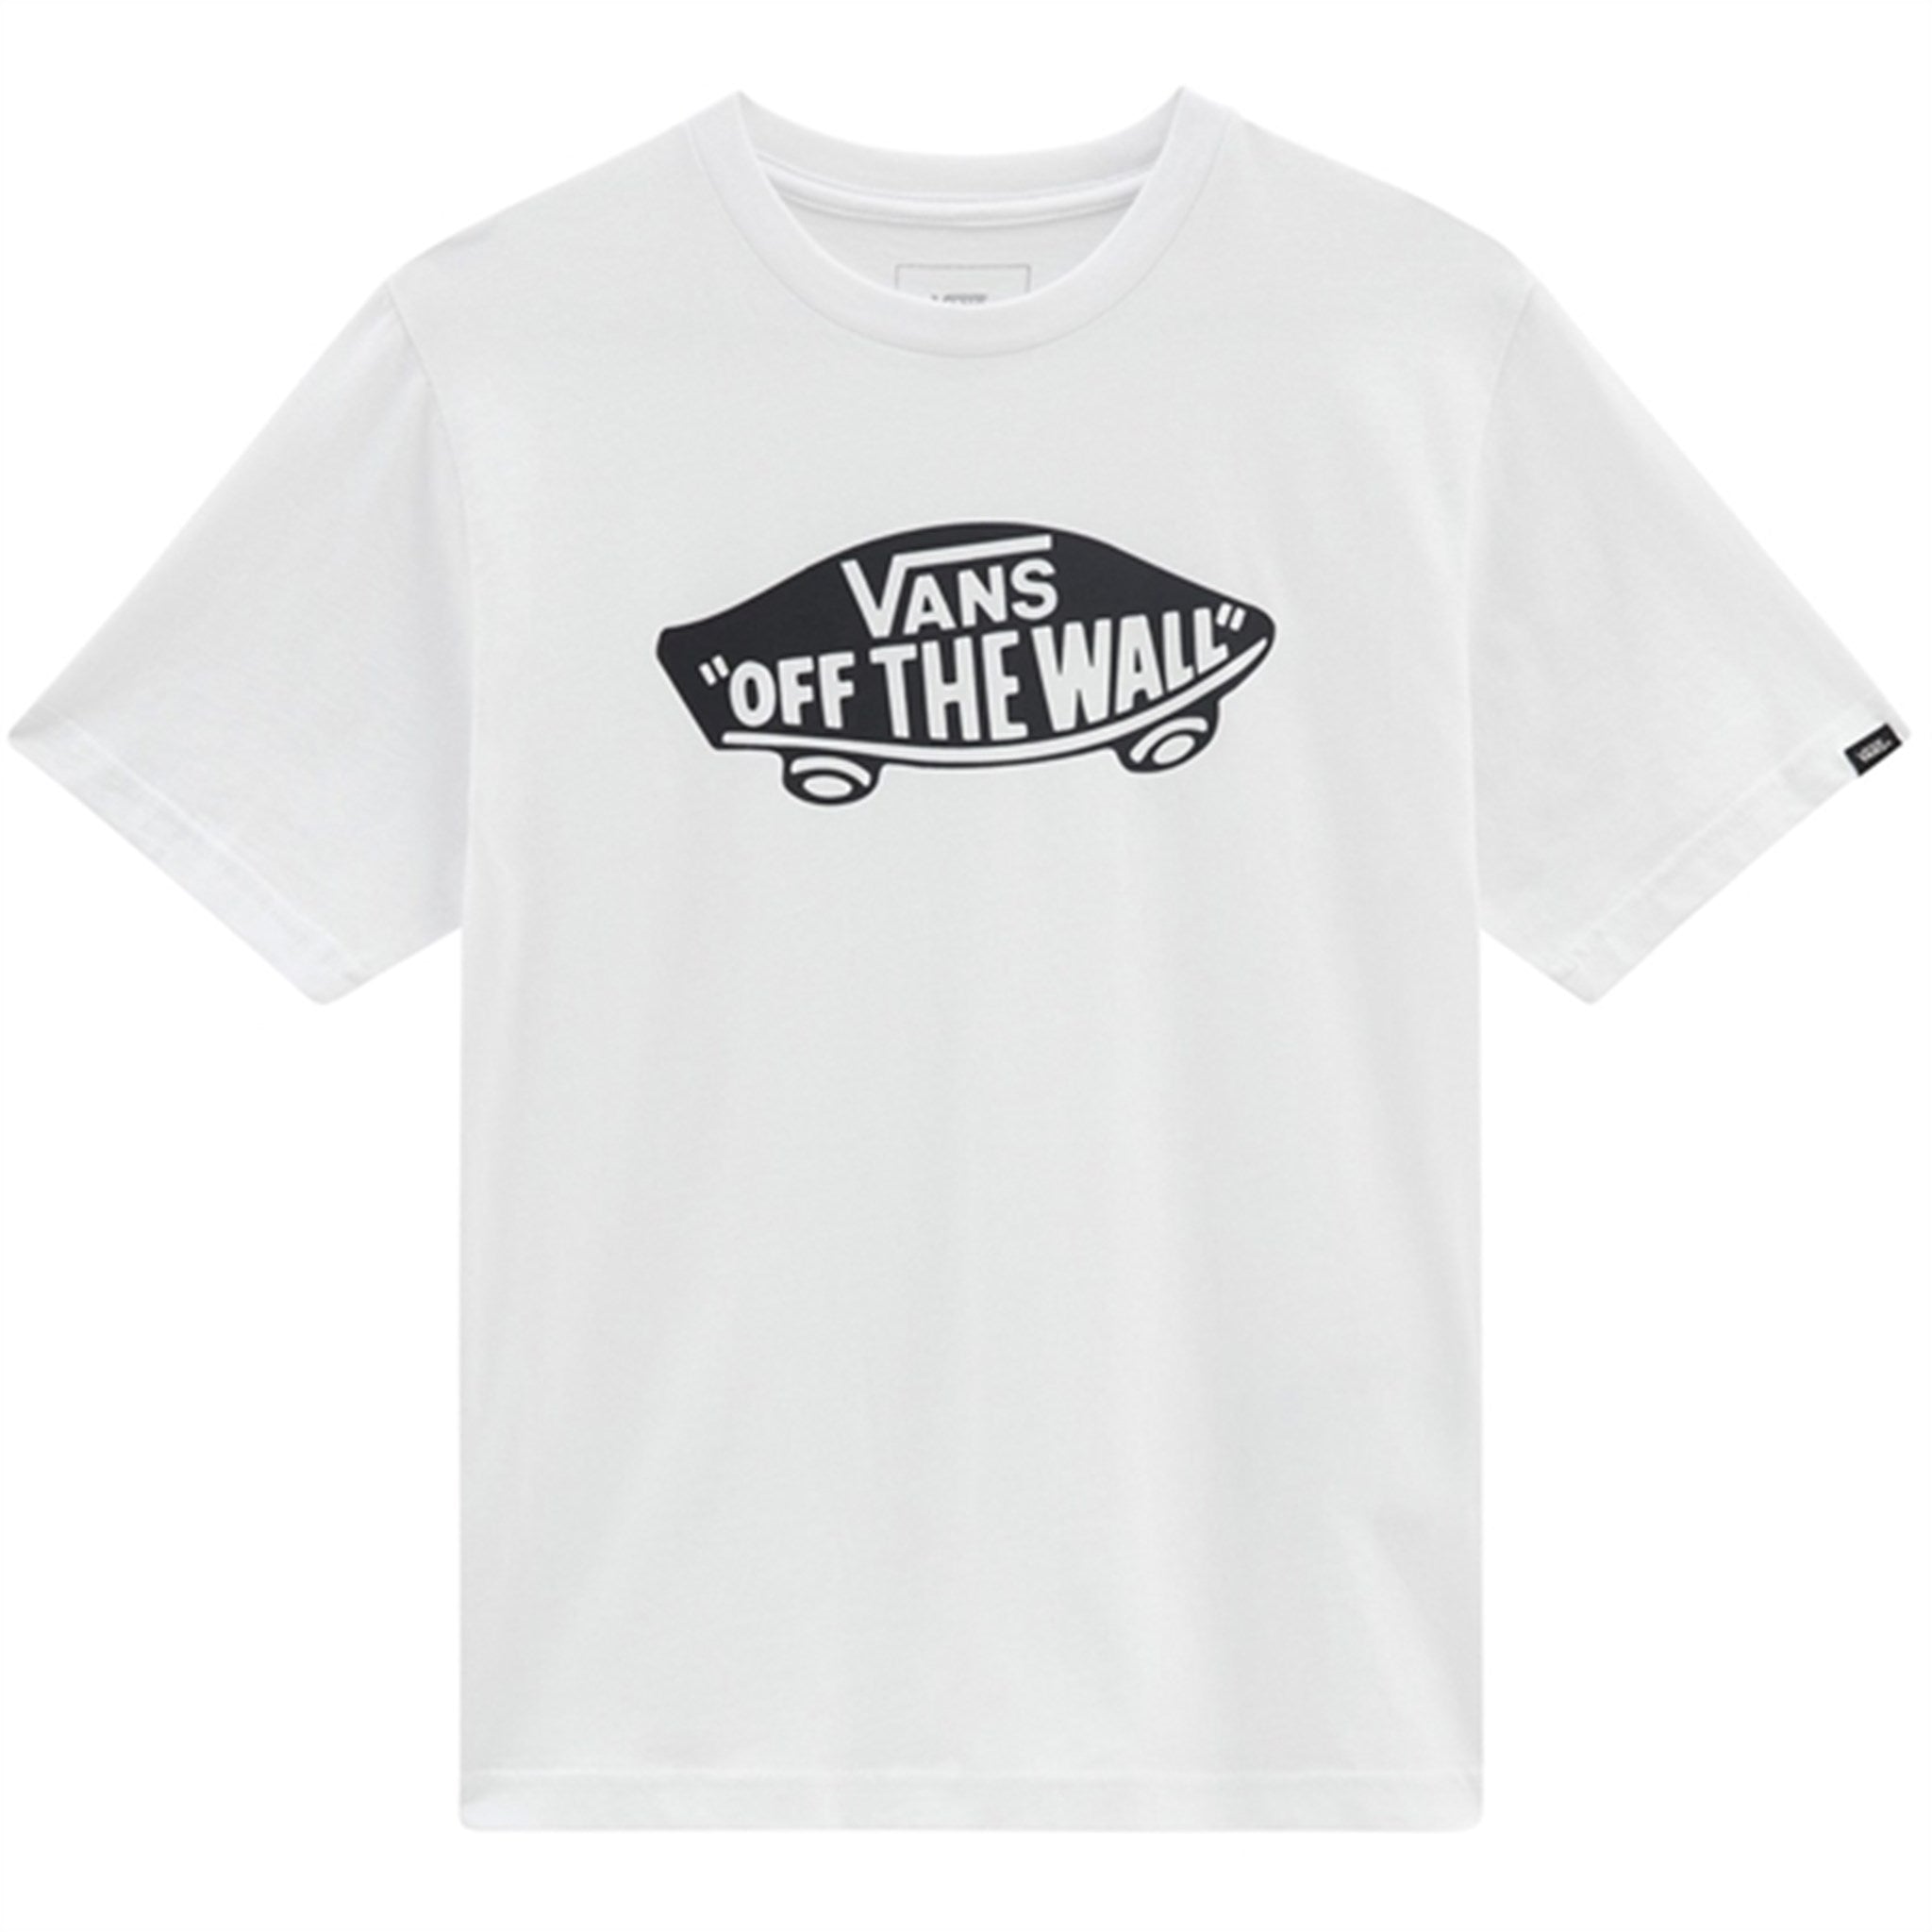 VANS OTW T-shirt White/Black